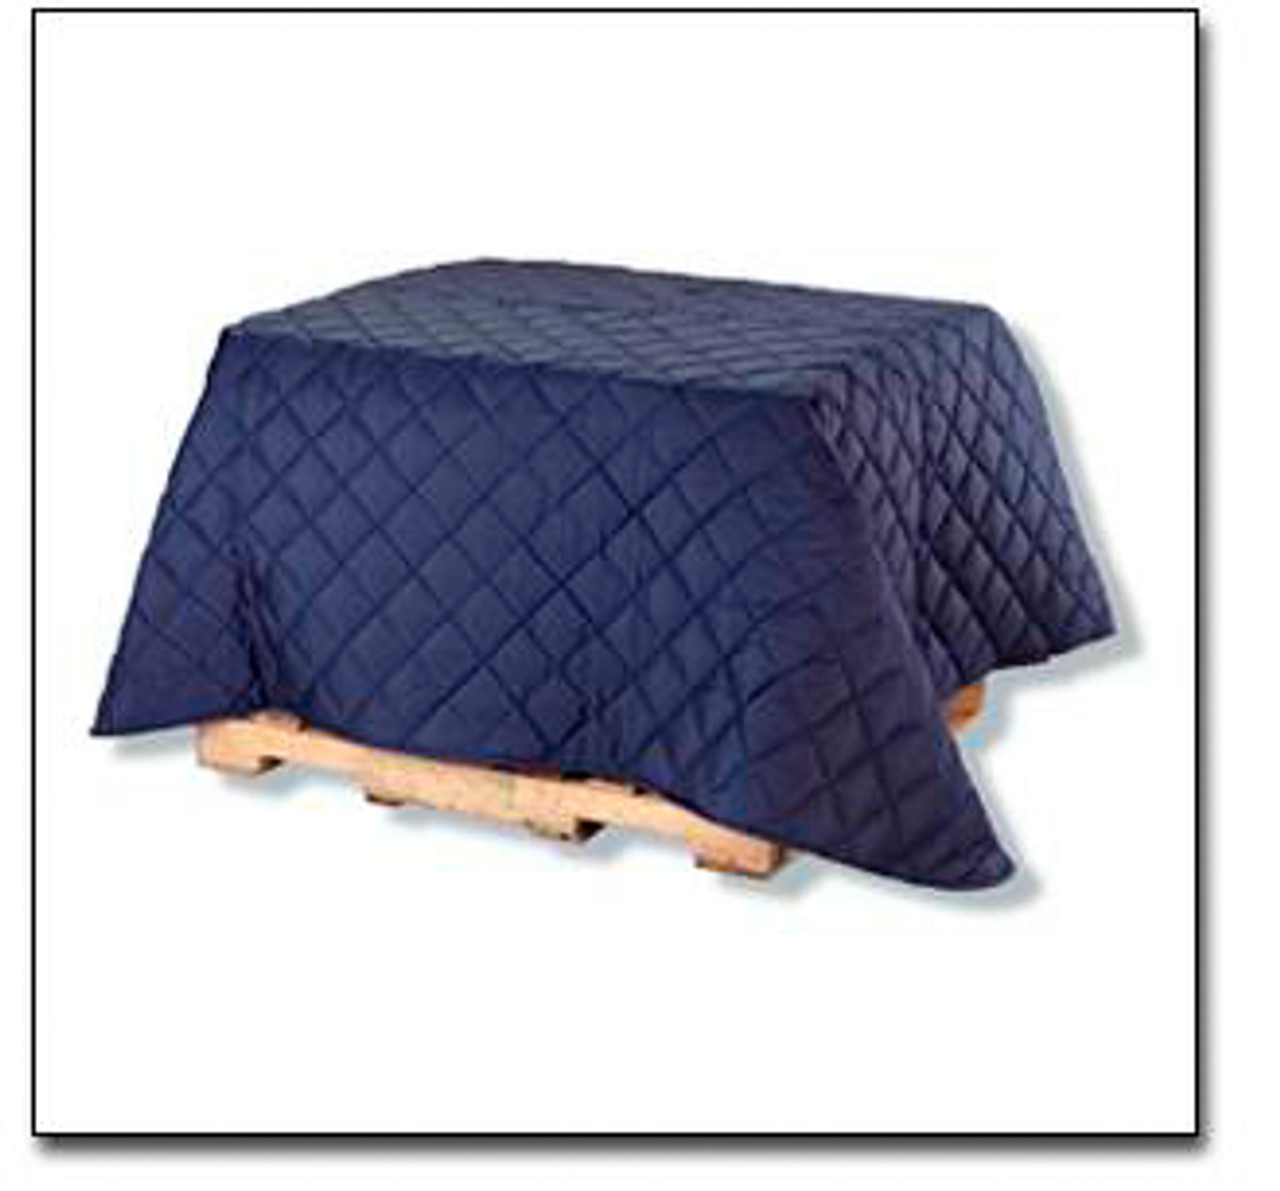 Bullkelp Weather resistant Insulated Blanket